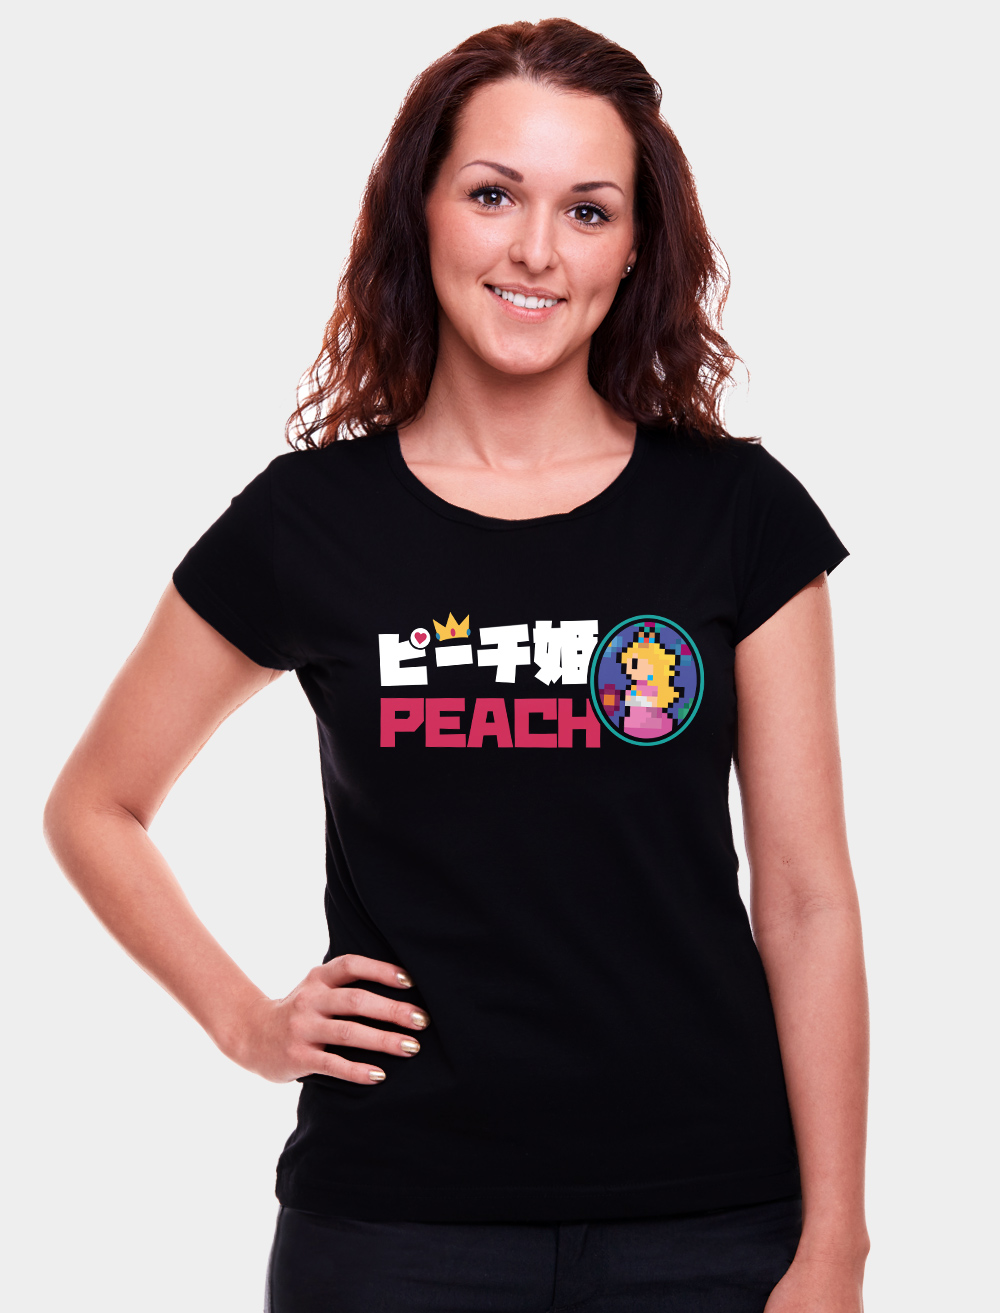 princess-peach-shirt-model1